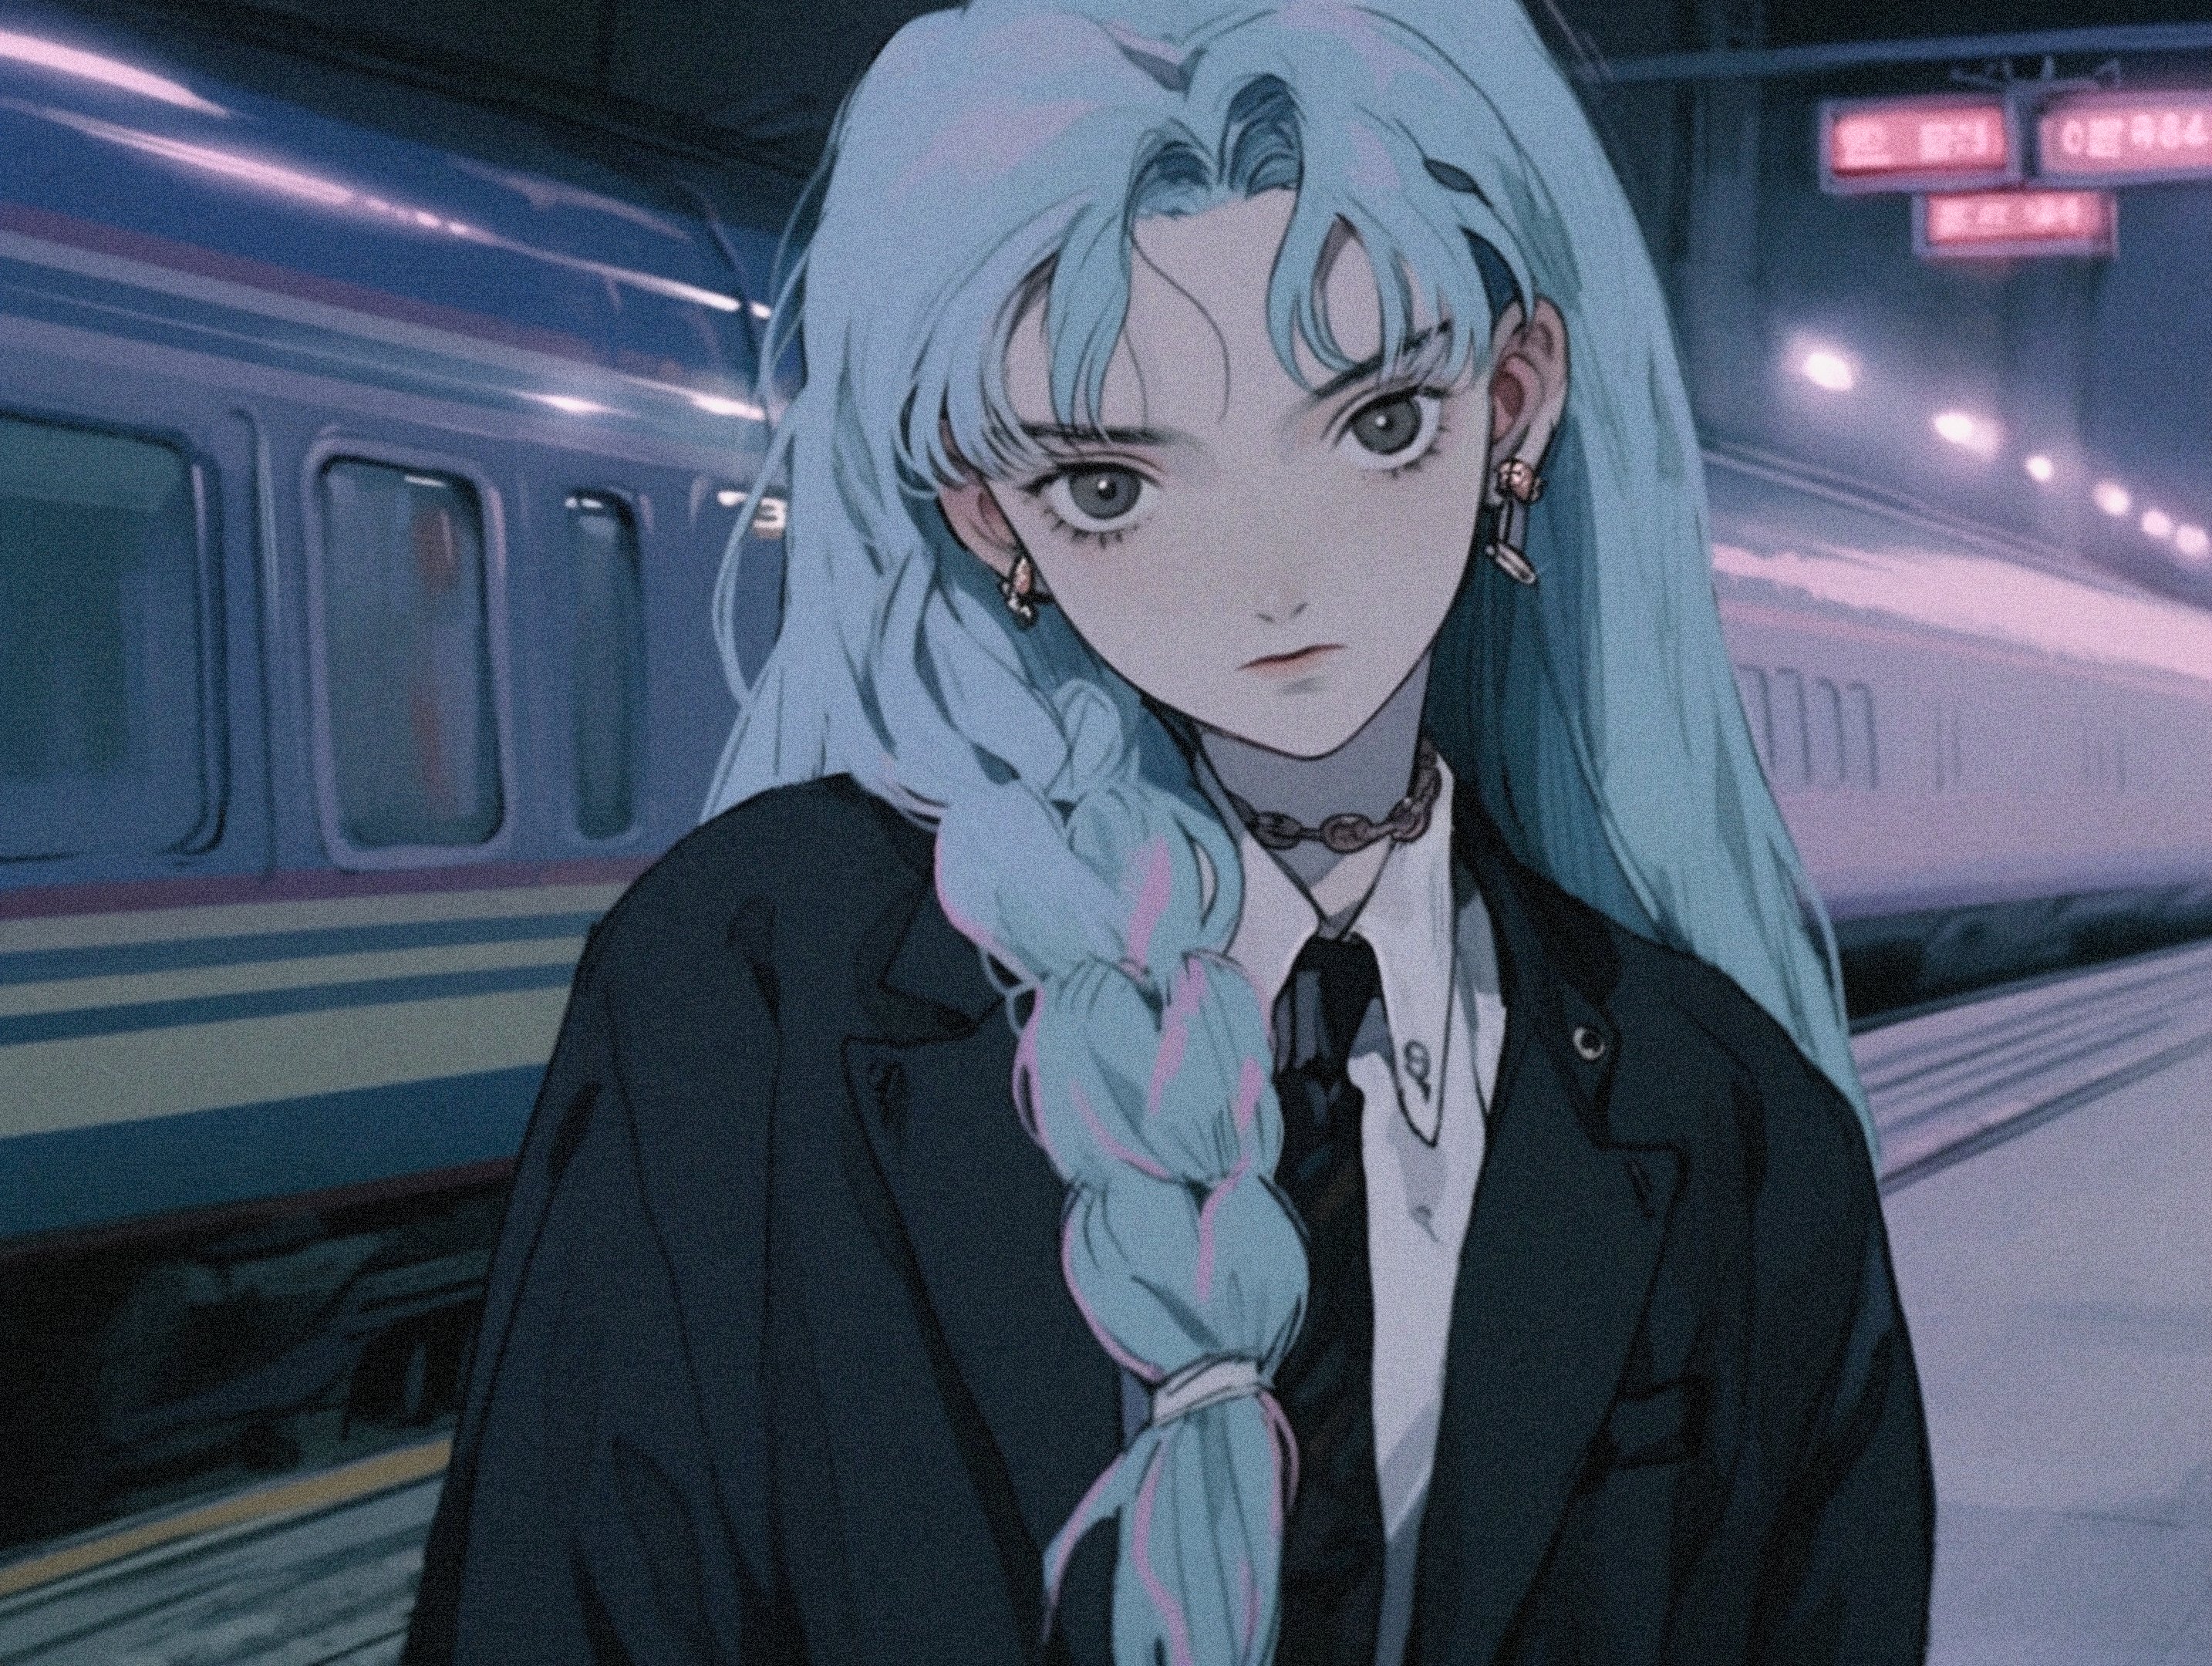 Anime 2868x2160 axynchro retro style anime girls portrait display braids earring choker train looking at viewer long hair blue hair suit and tie AI art